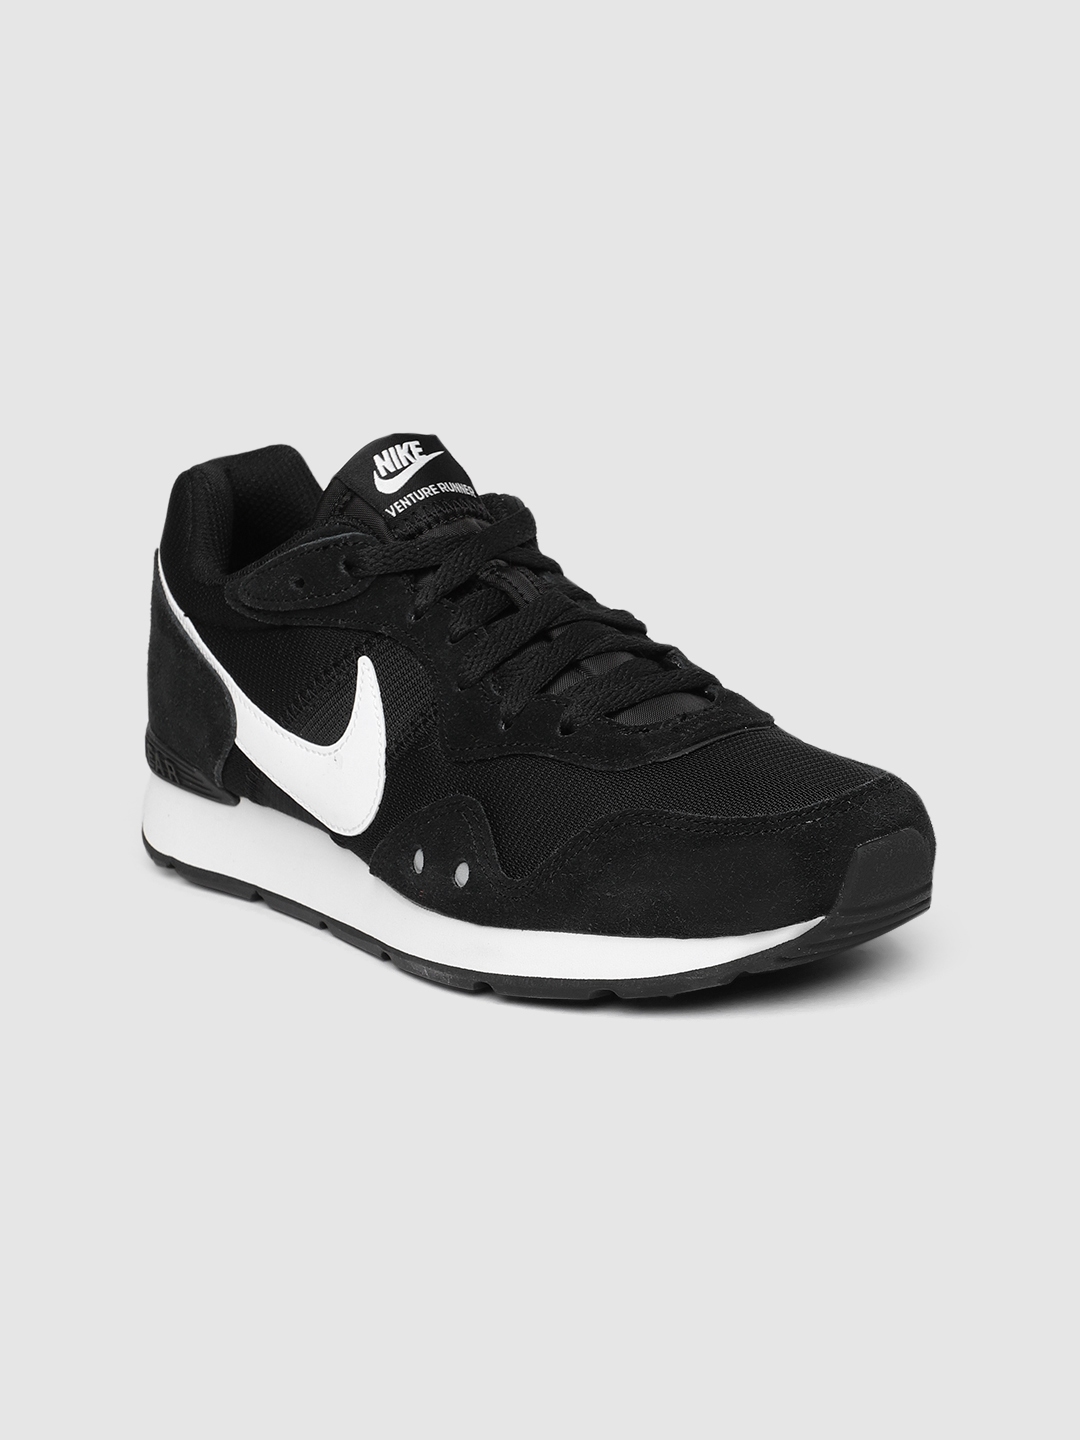 Buy Nike Women Black VENTURE RUNNER Running Shoes - Sports Shoes for